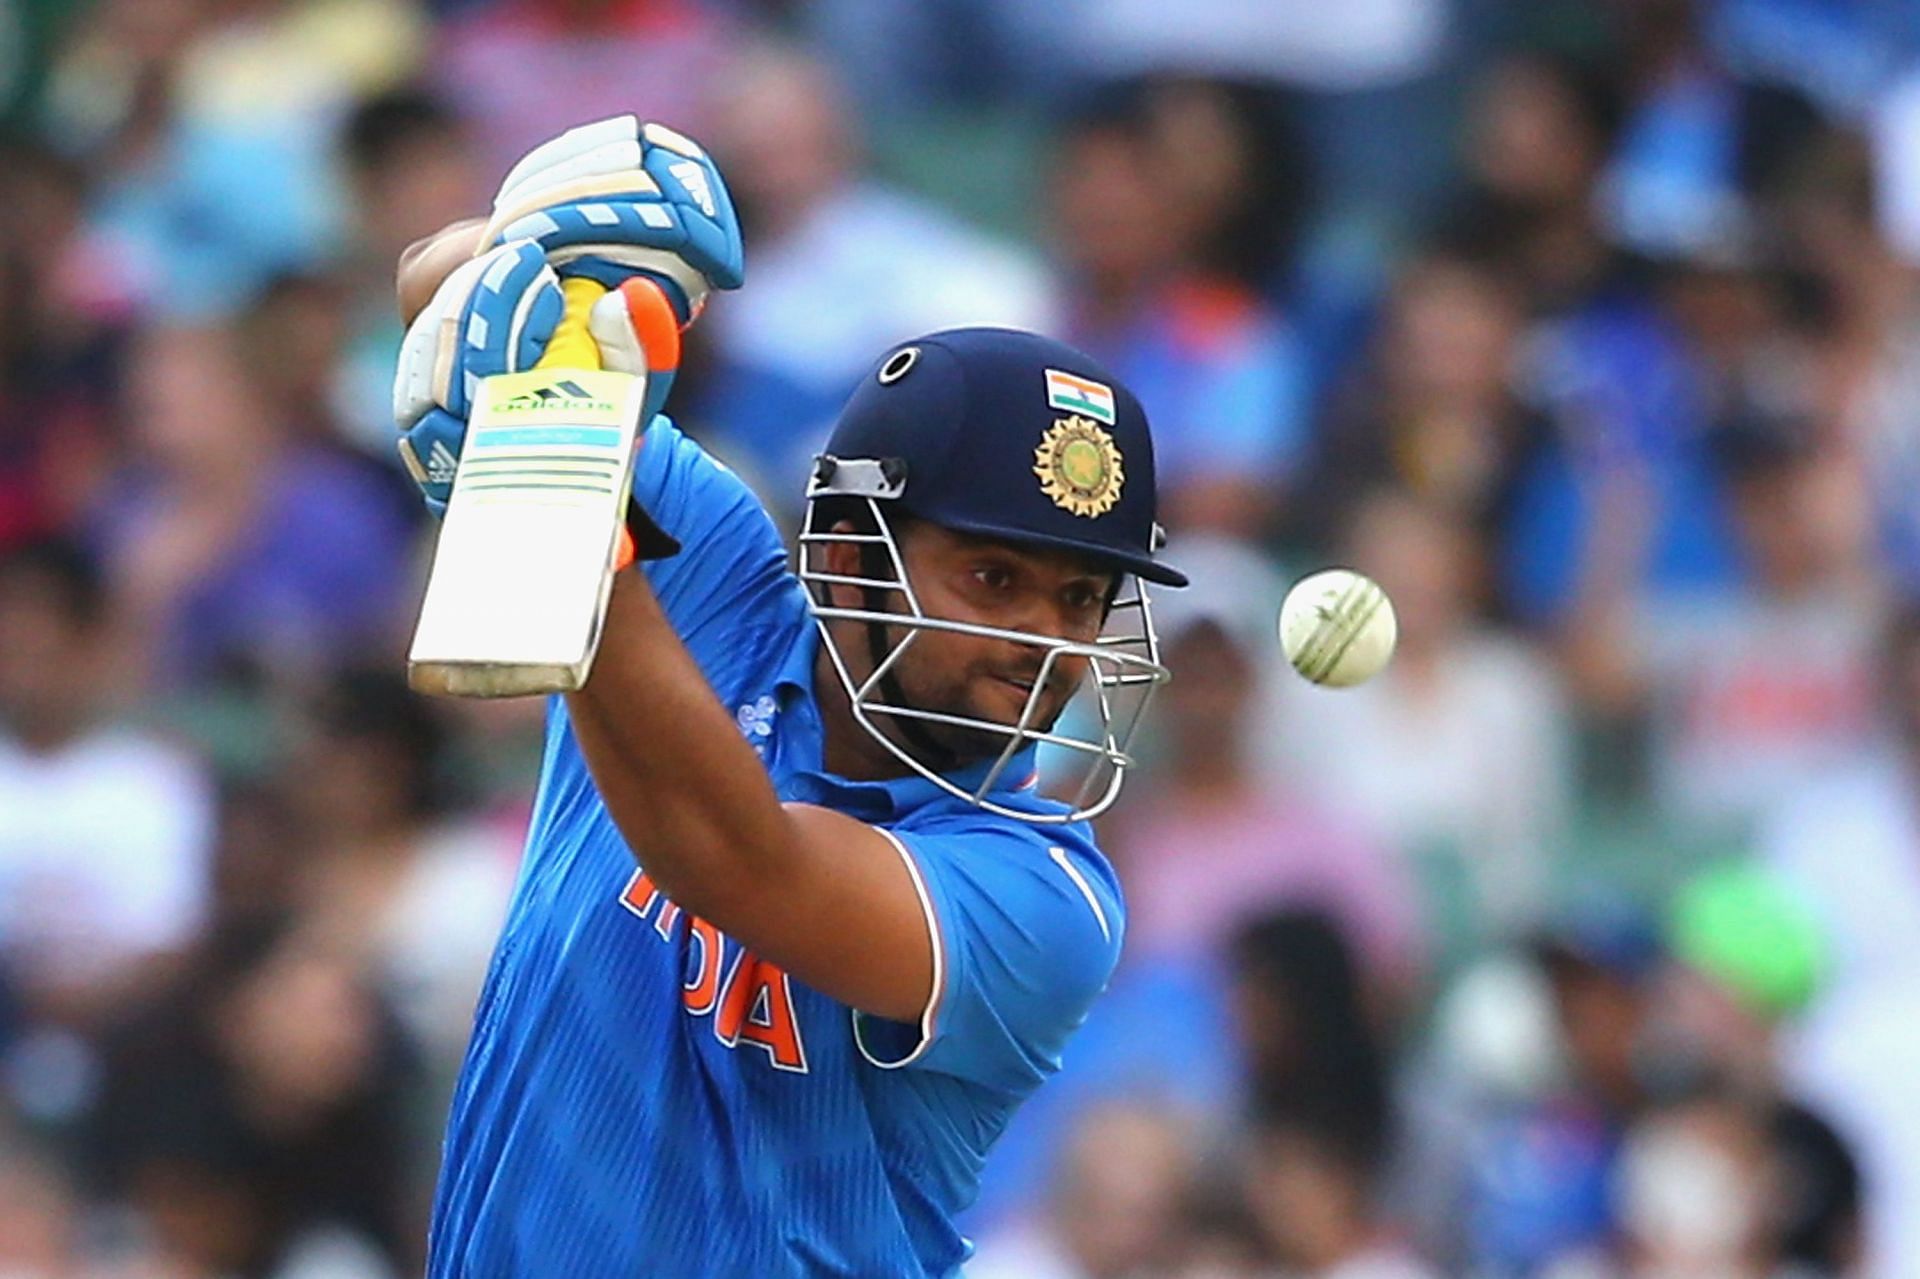 India v Bangladesh: Quarter Final - 2015 ICC Cricket World Cup